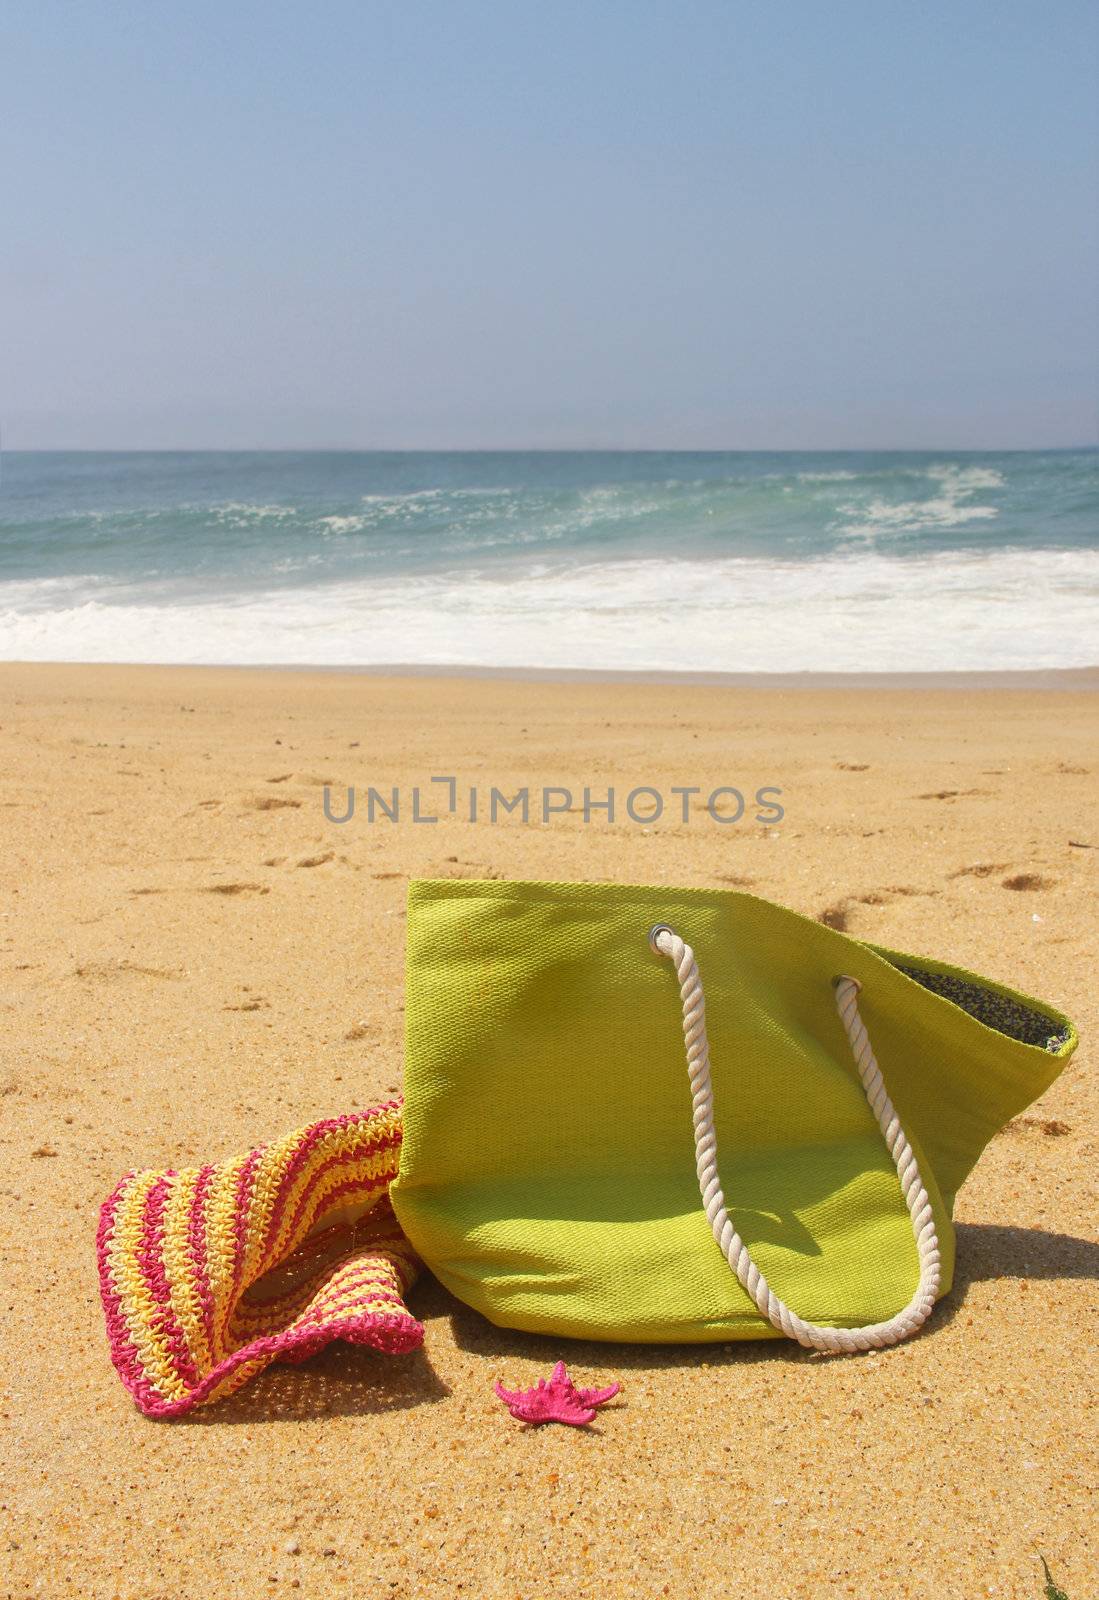 Green beach bag, pink straw hat and starfish